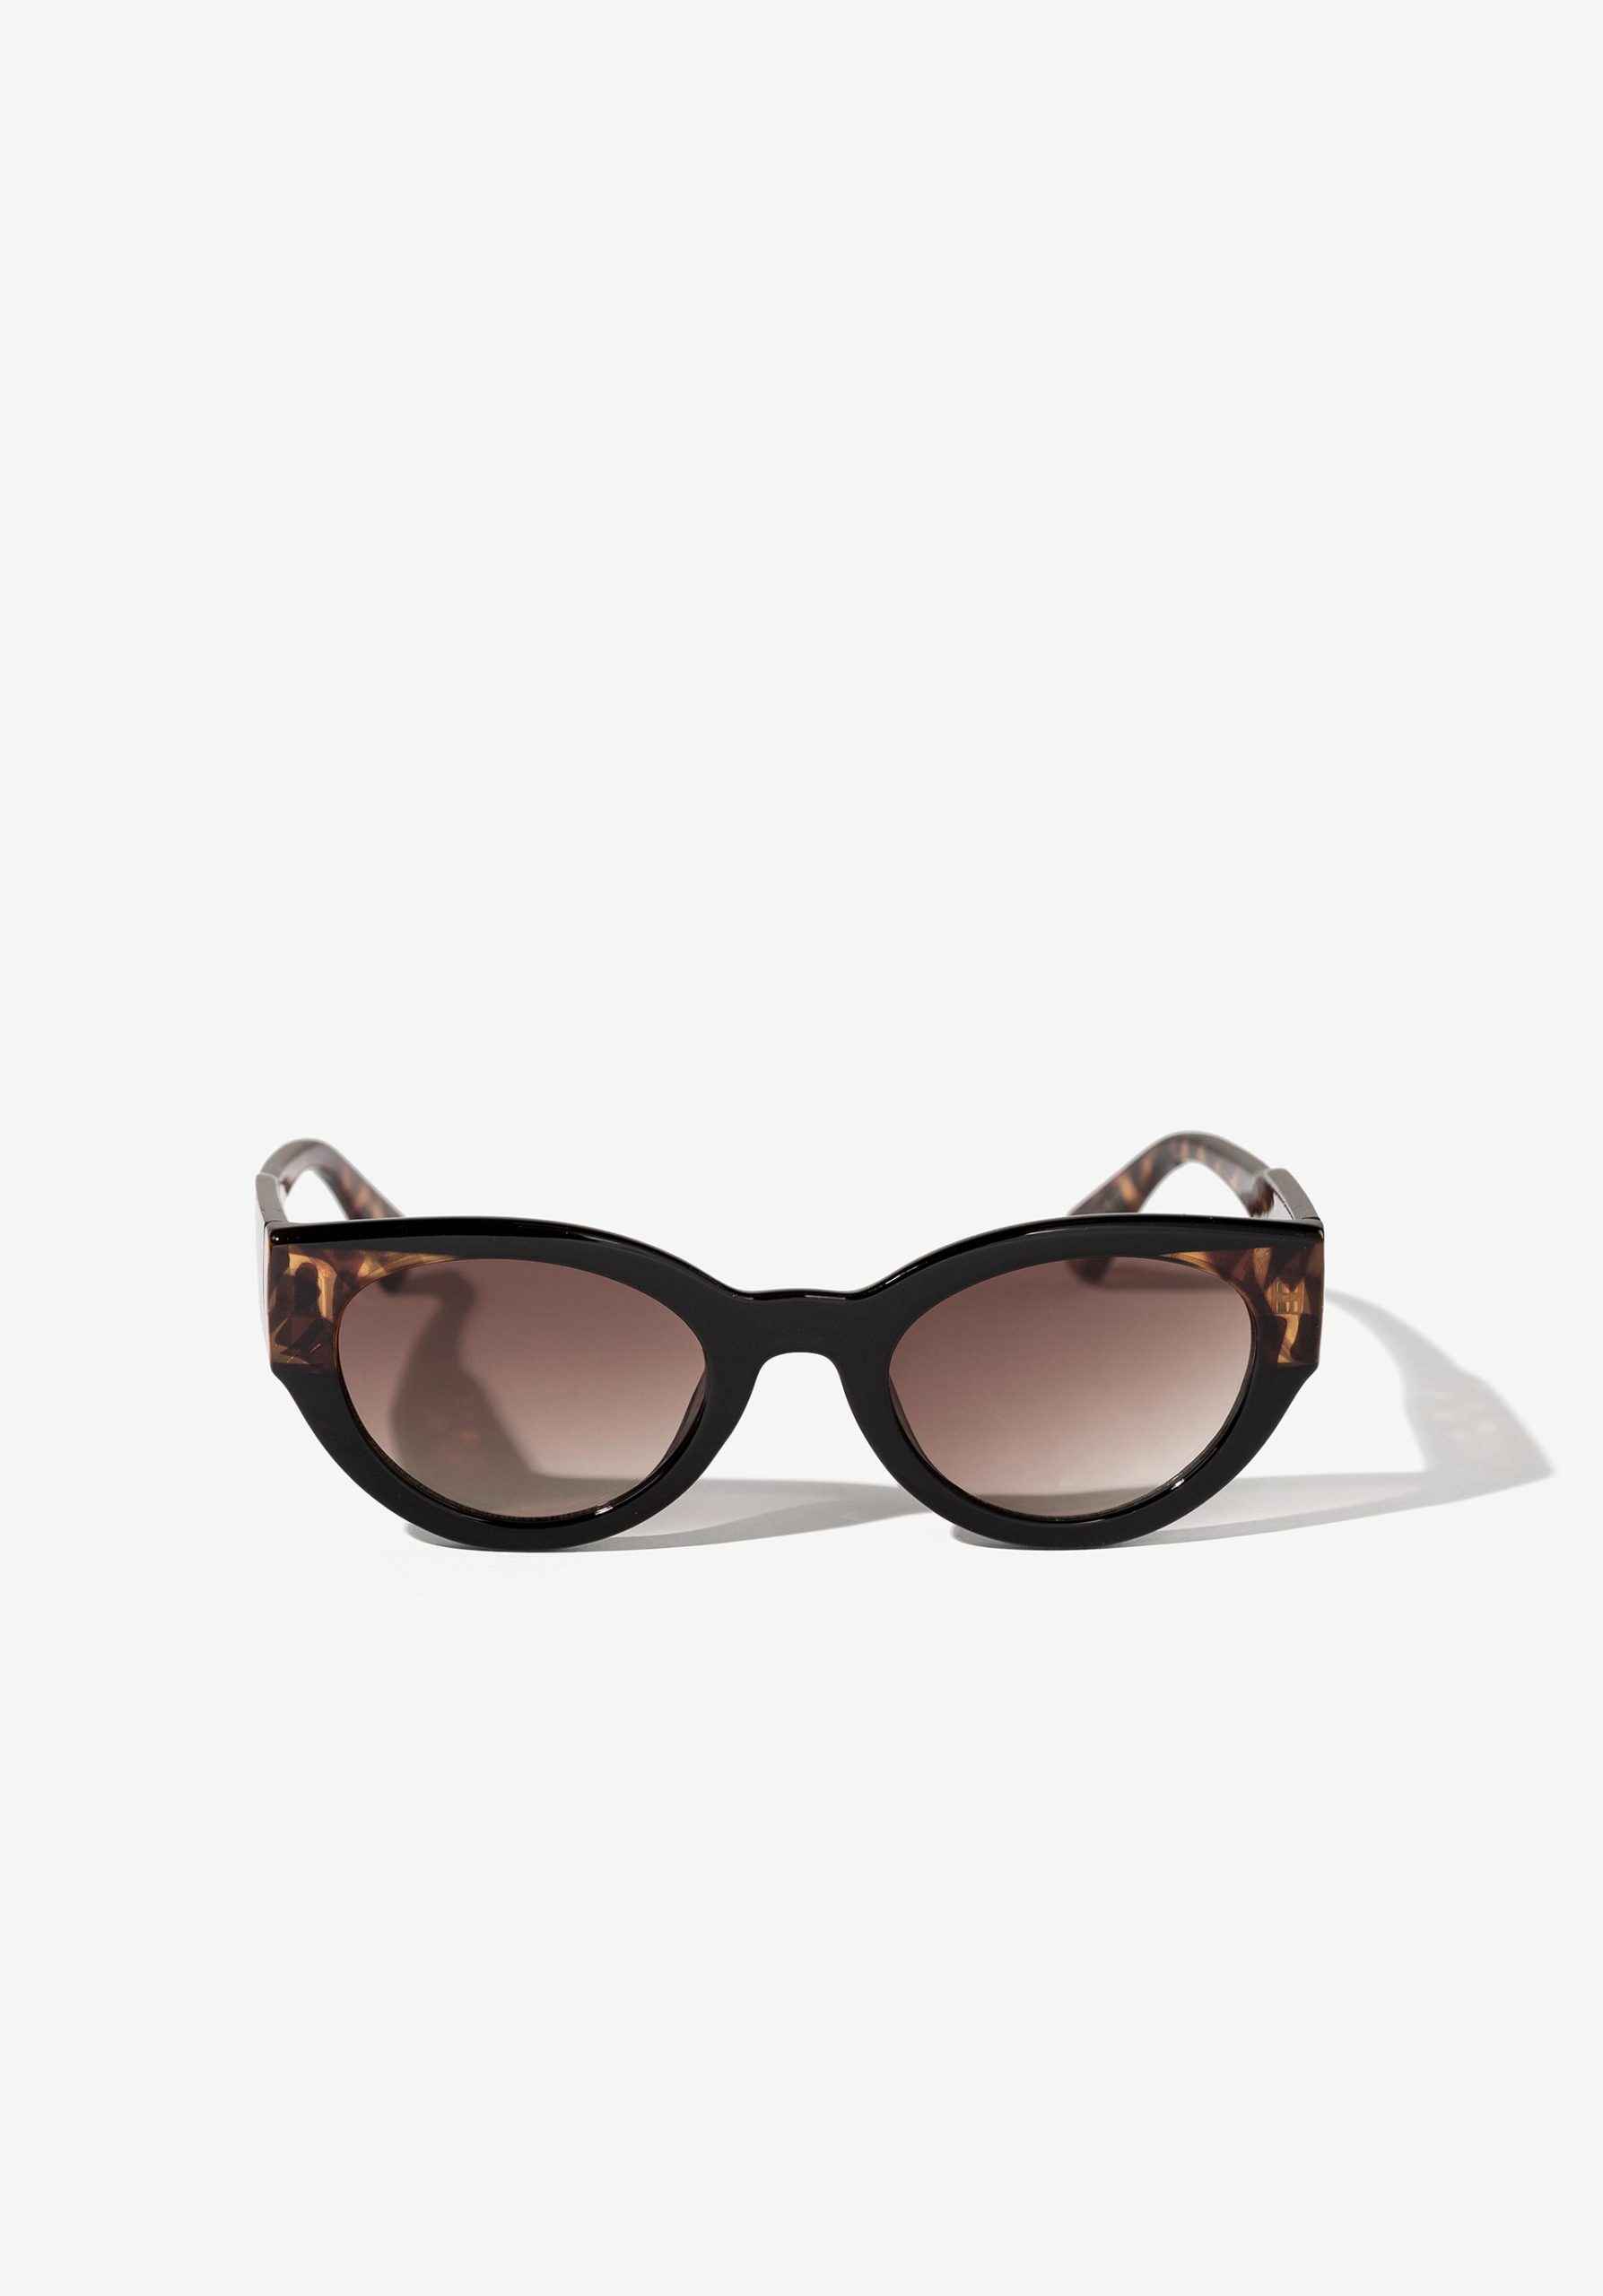 Gafas de sol ovaladas con pasta efecto carey modelo 71004422 de Vilanova.